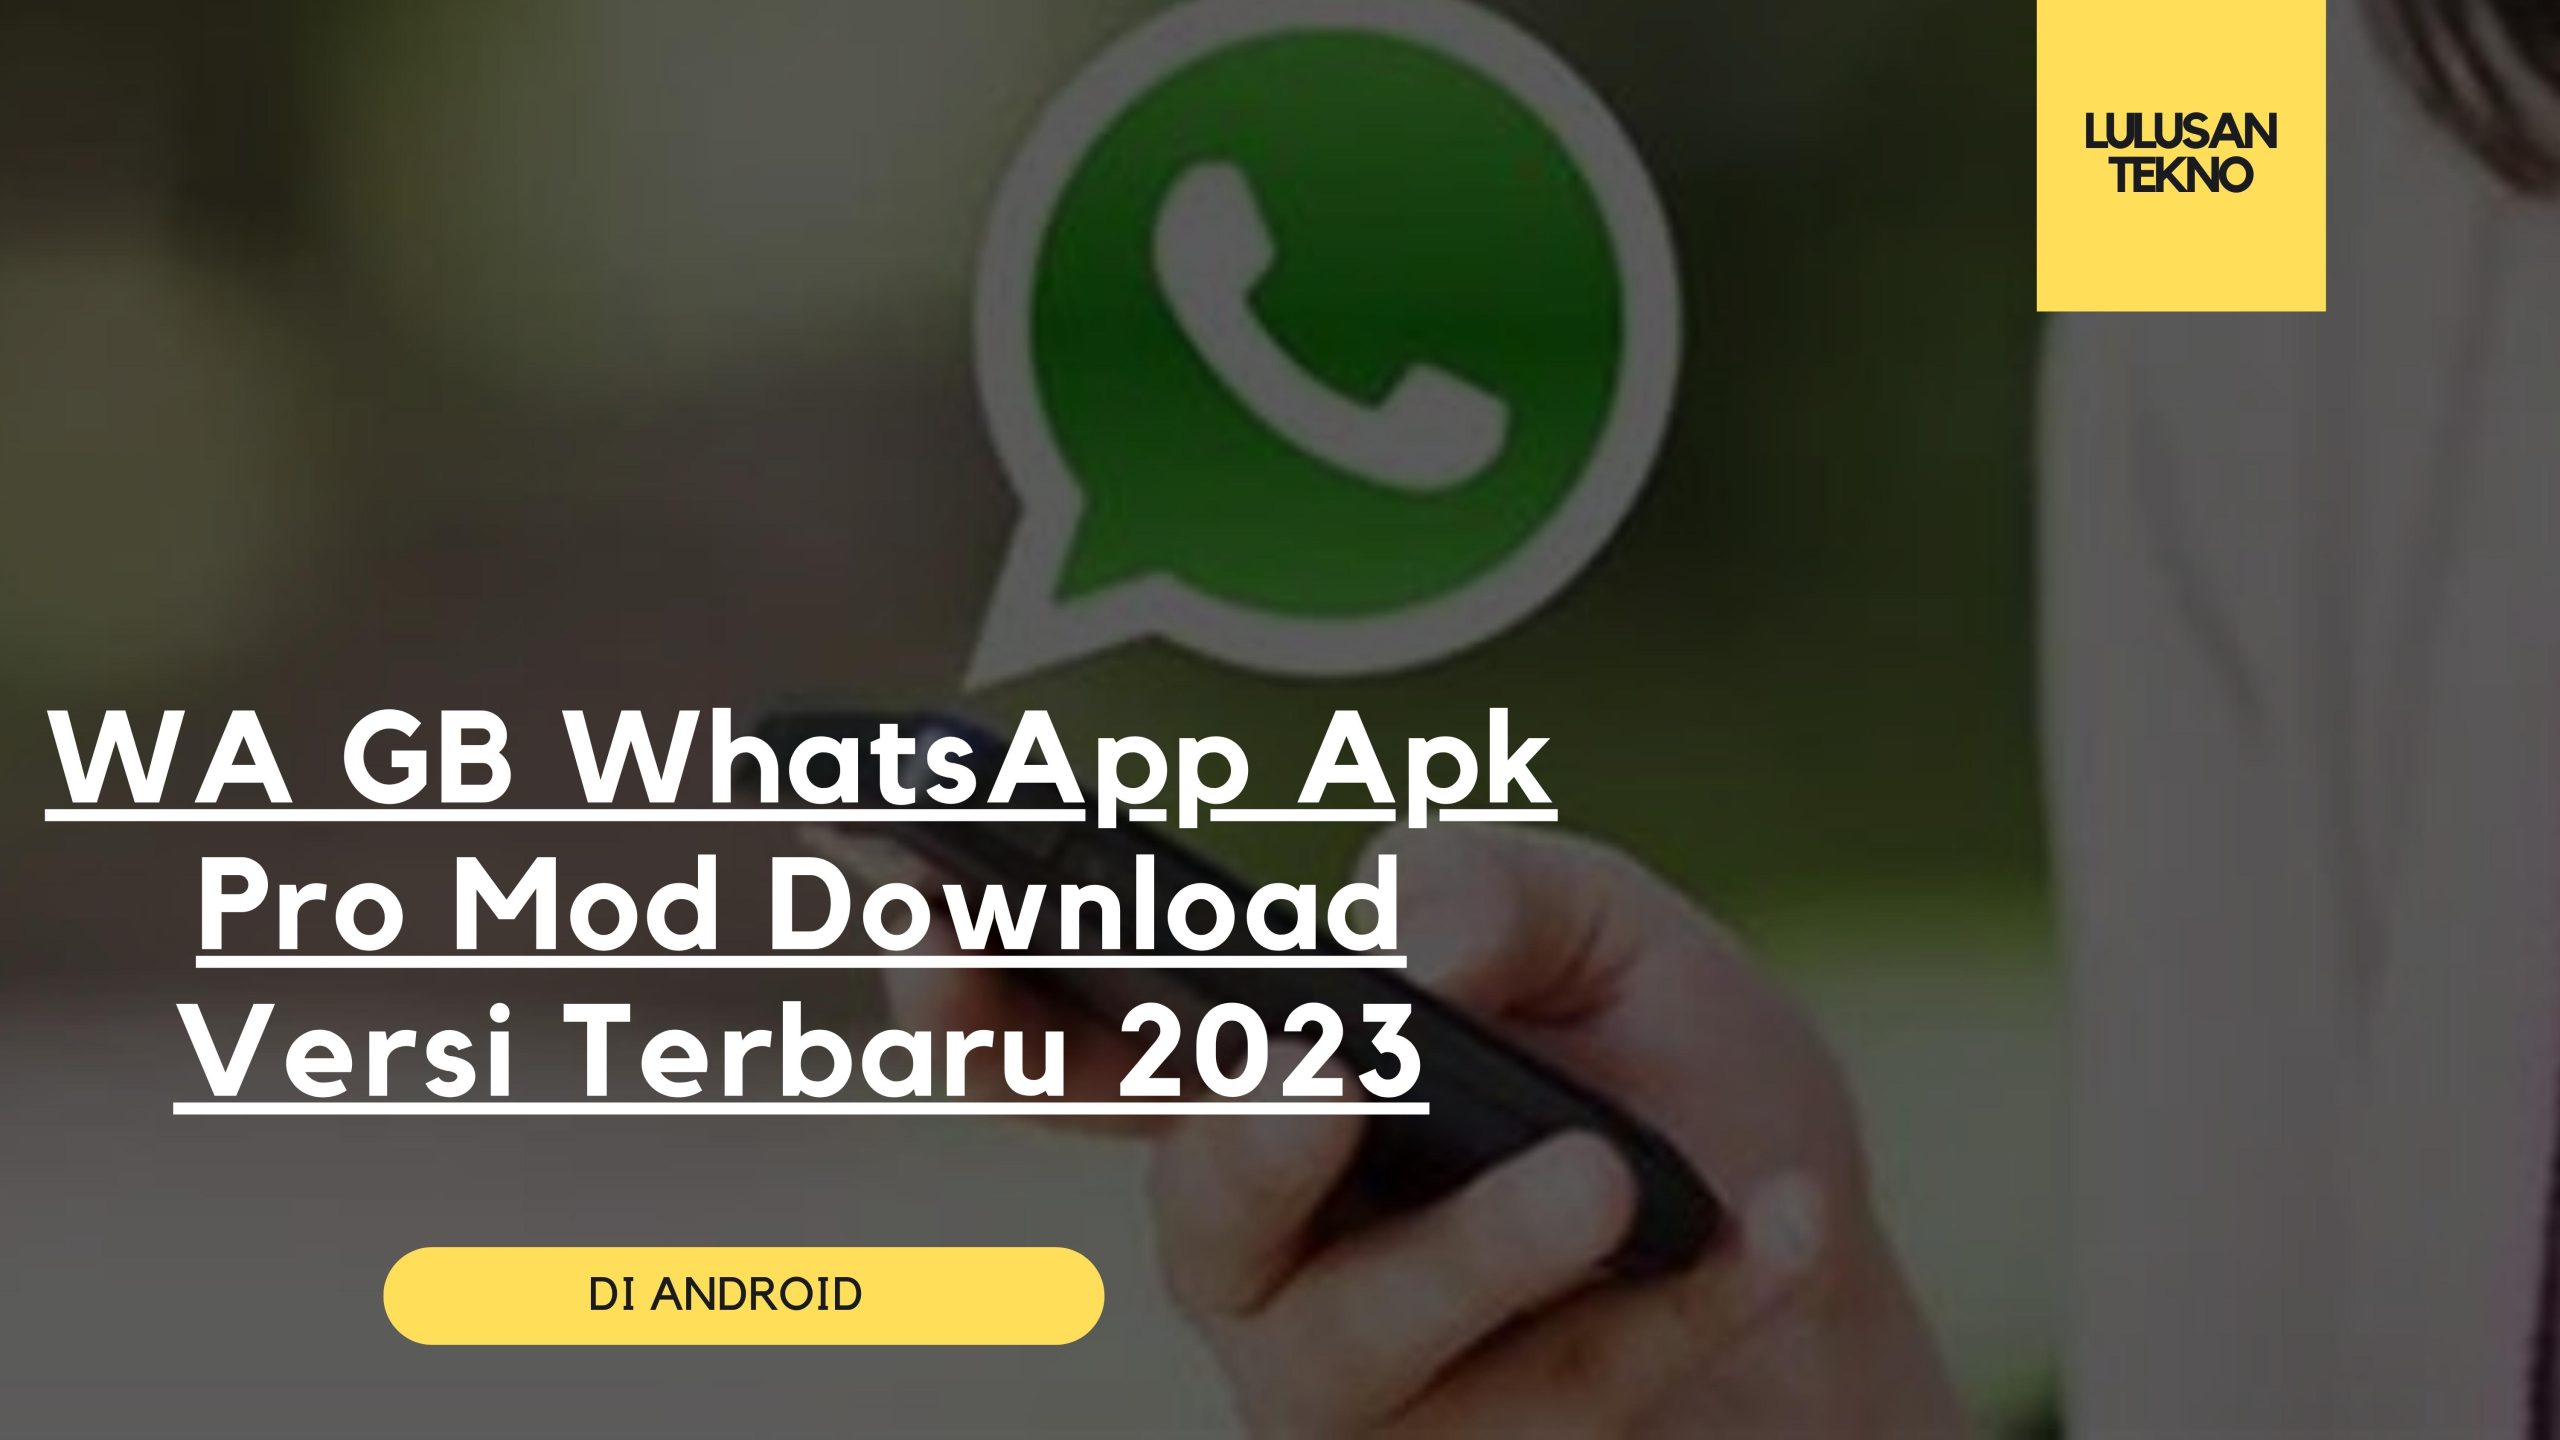 WA GB WhatsApp Apk Pro Mod Download Versi Terbaru 2023